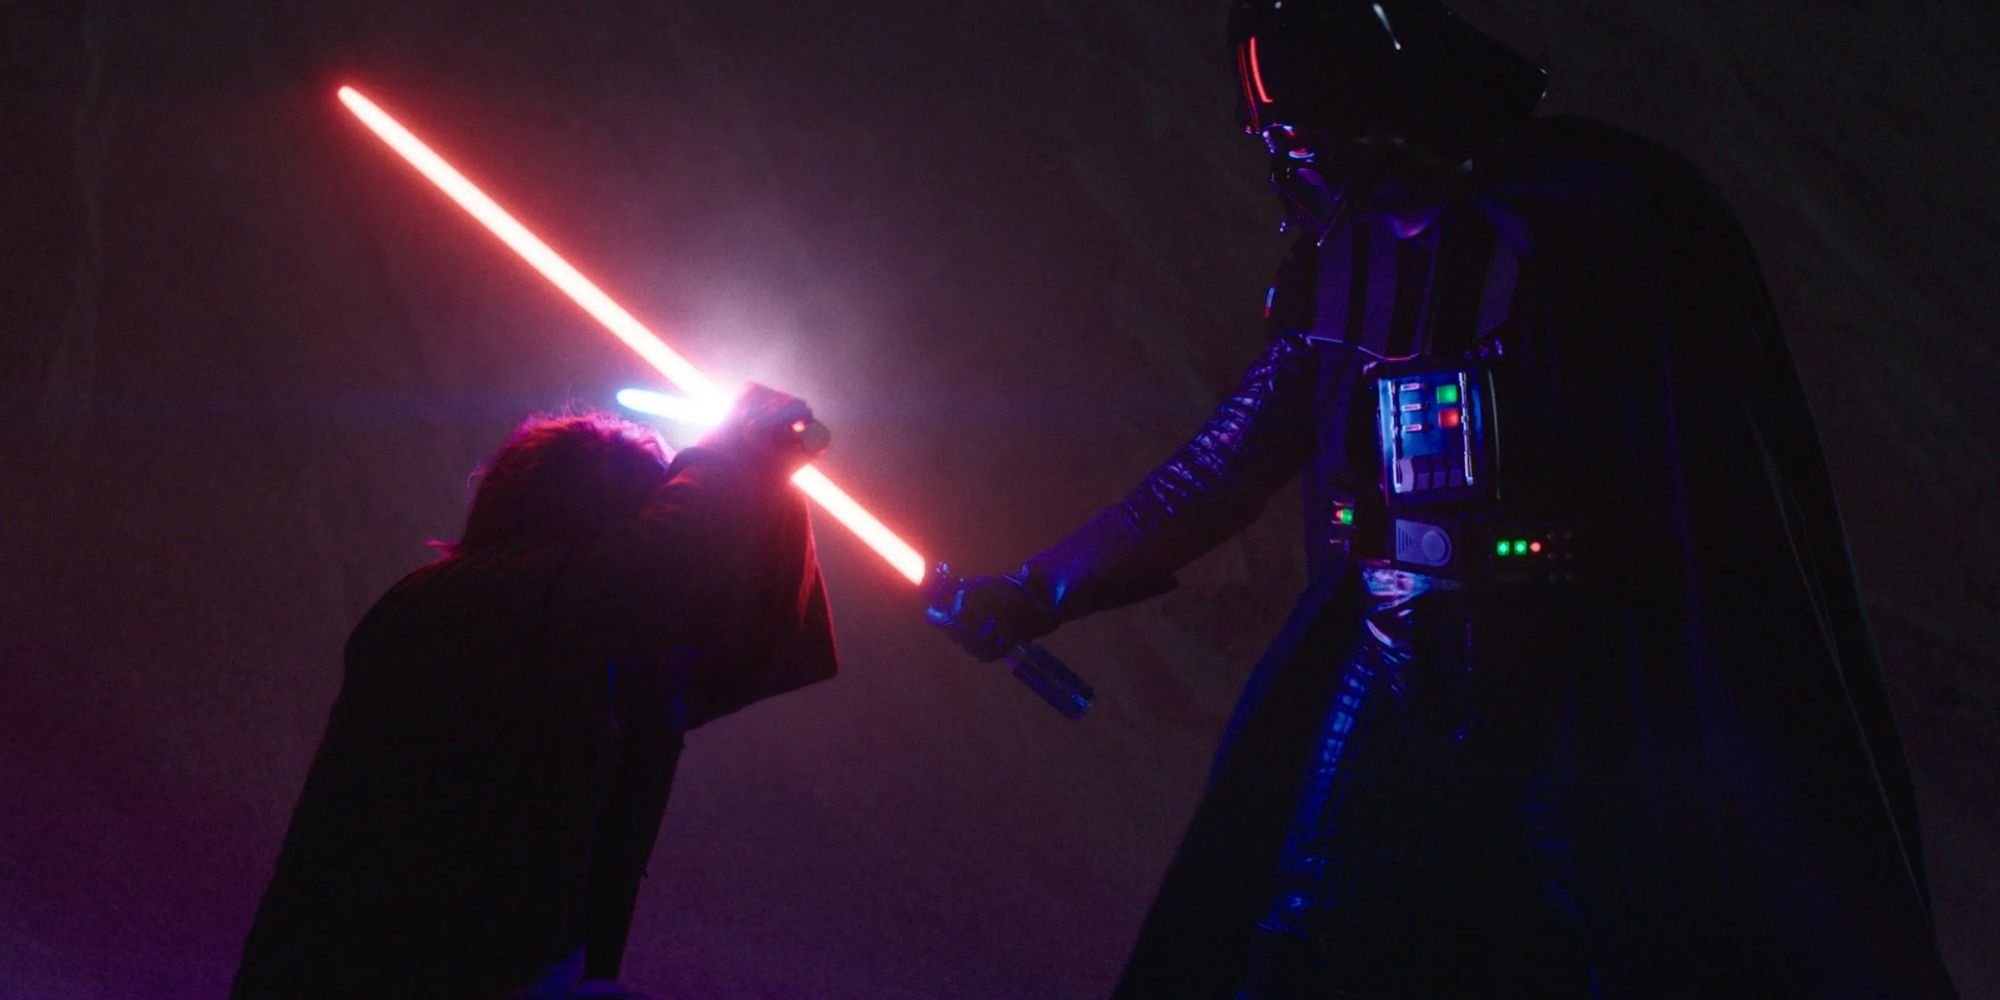 Obi-Wan Kenobi and Darth Vader fight in the dark